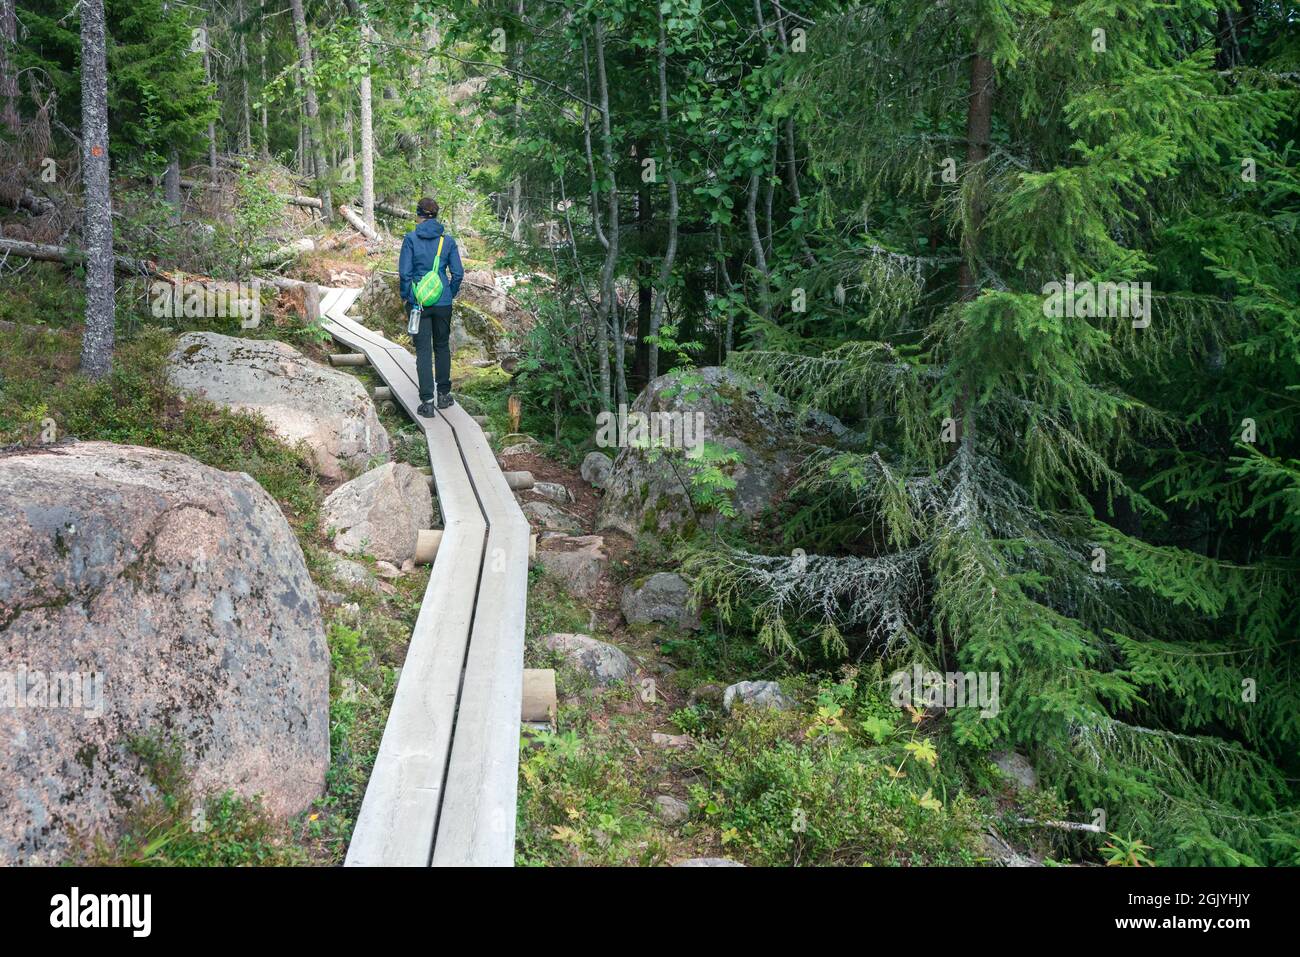 Female hiker walking on a narrow wooden walk through the forest in Skuleskogen National Park, Sweden. Stock Photo